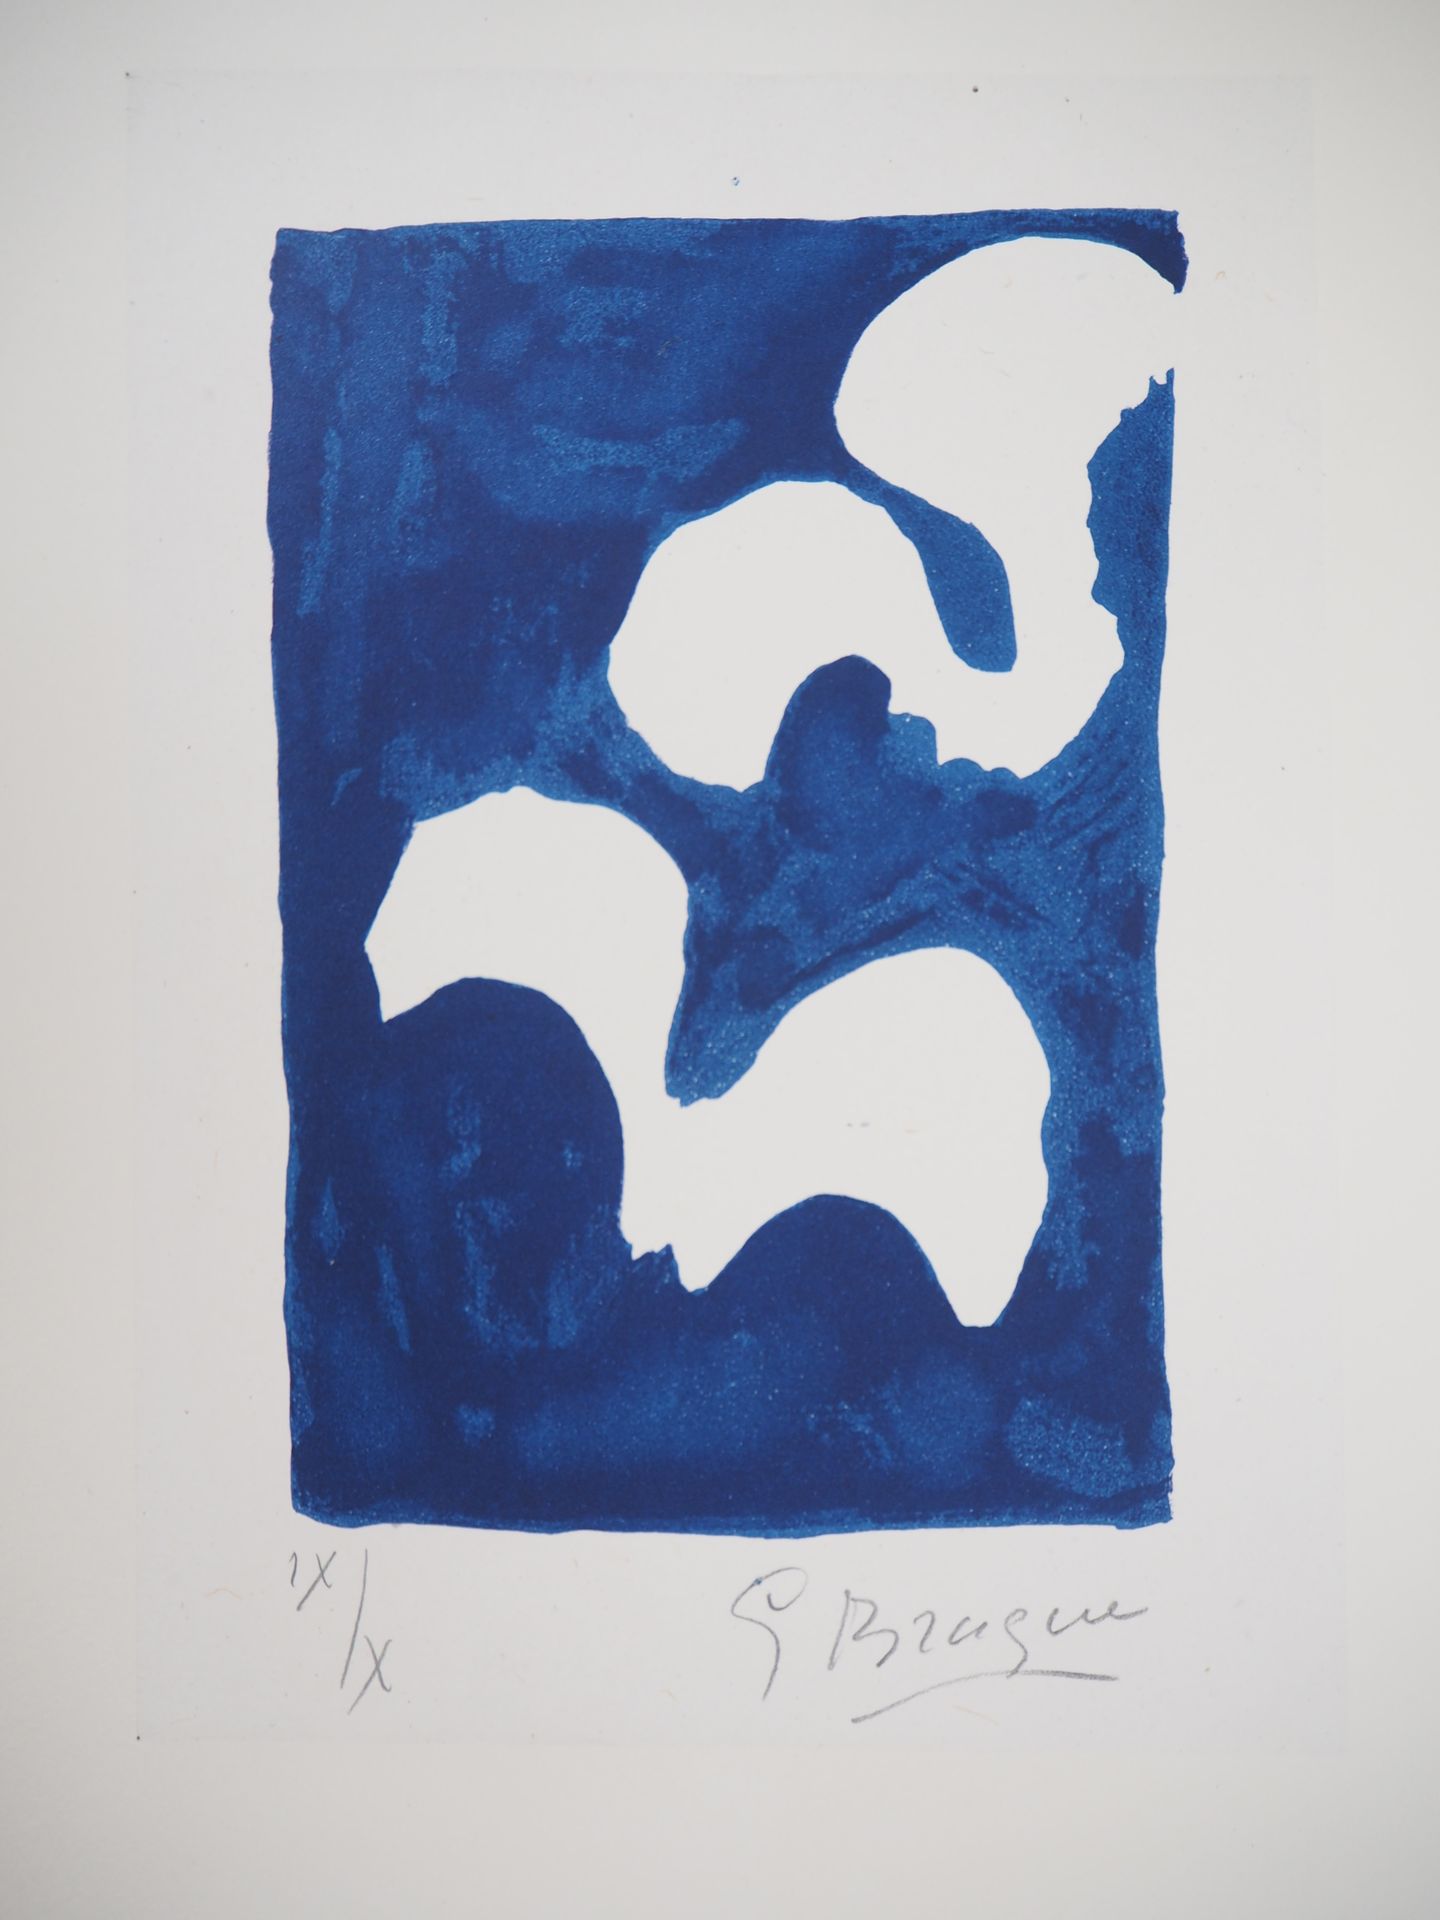 Georges Braque 乔治-布拉克 (1882-1963)

黑夜中的鸟儿，1960年

原始石版画

用铅笔签名

编号/10份罗马数字

在Desj&hellip;